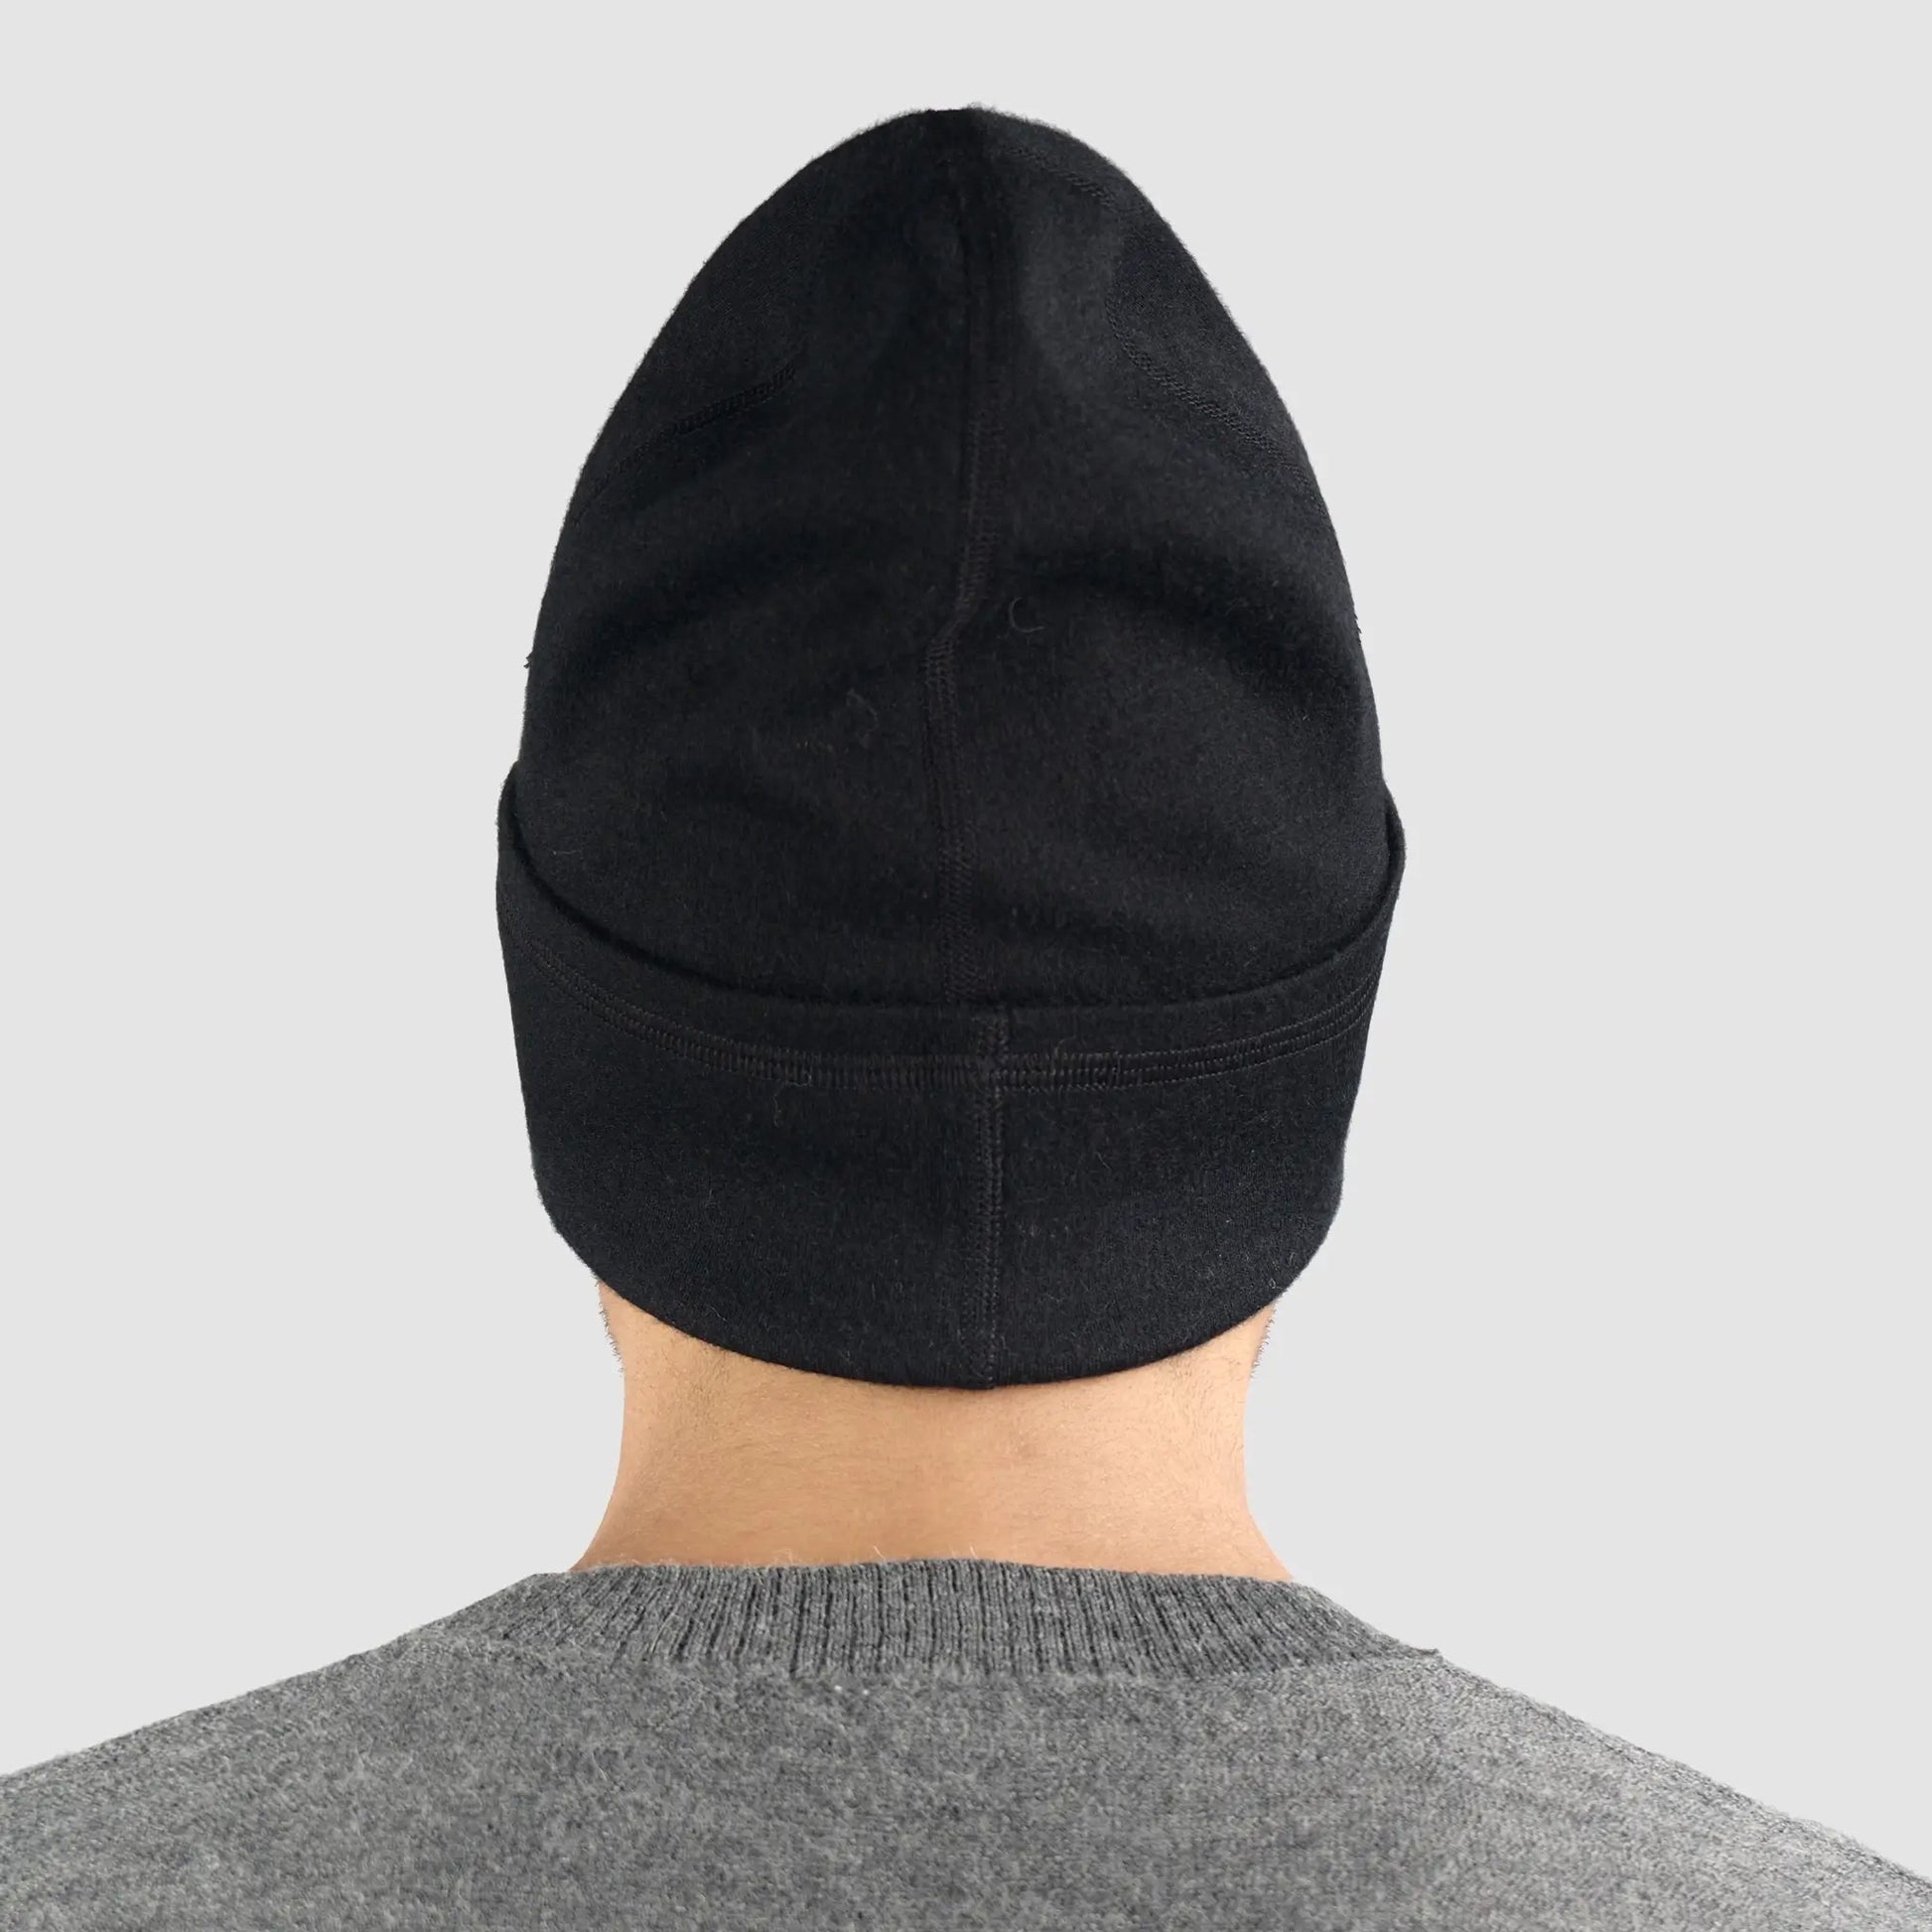 unisex outdoor activities folded beanie hat lightweight color black